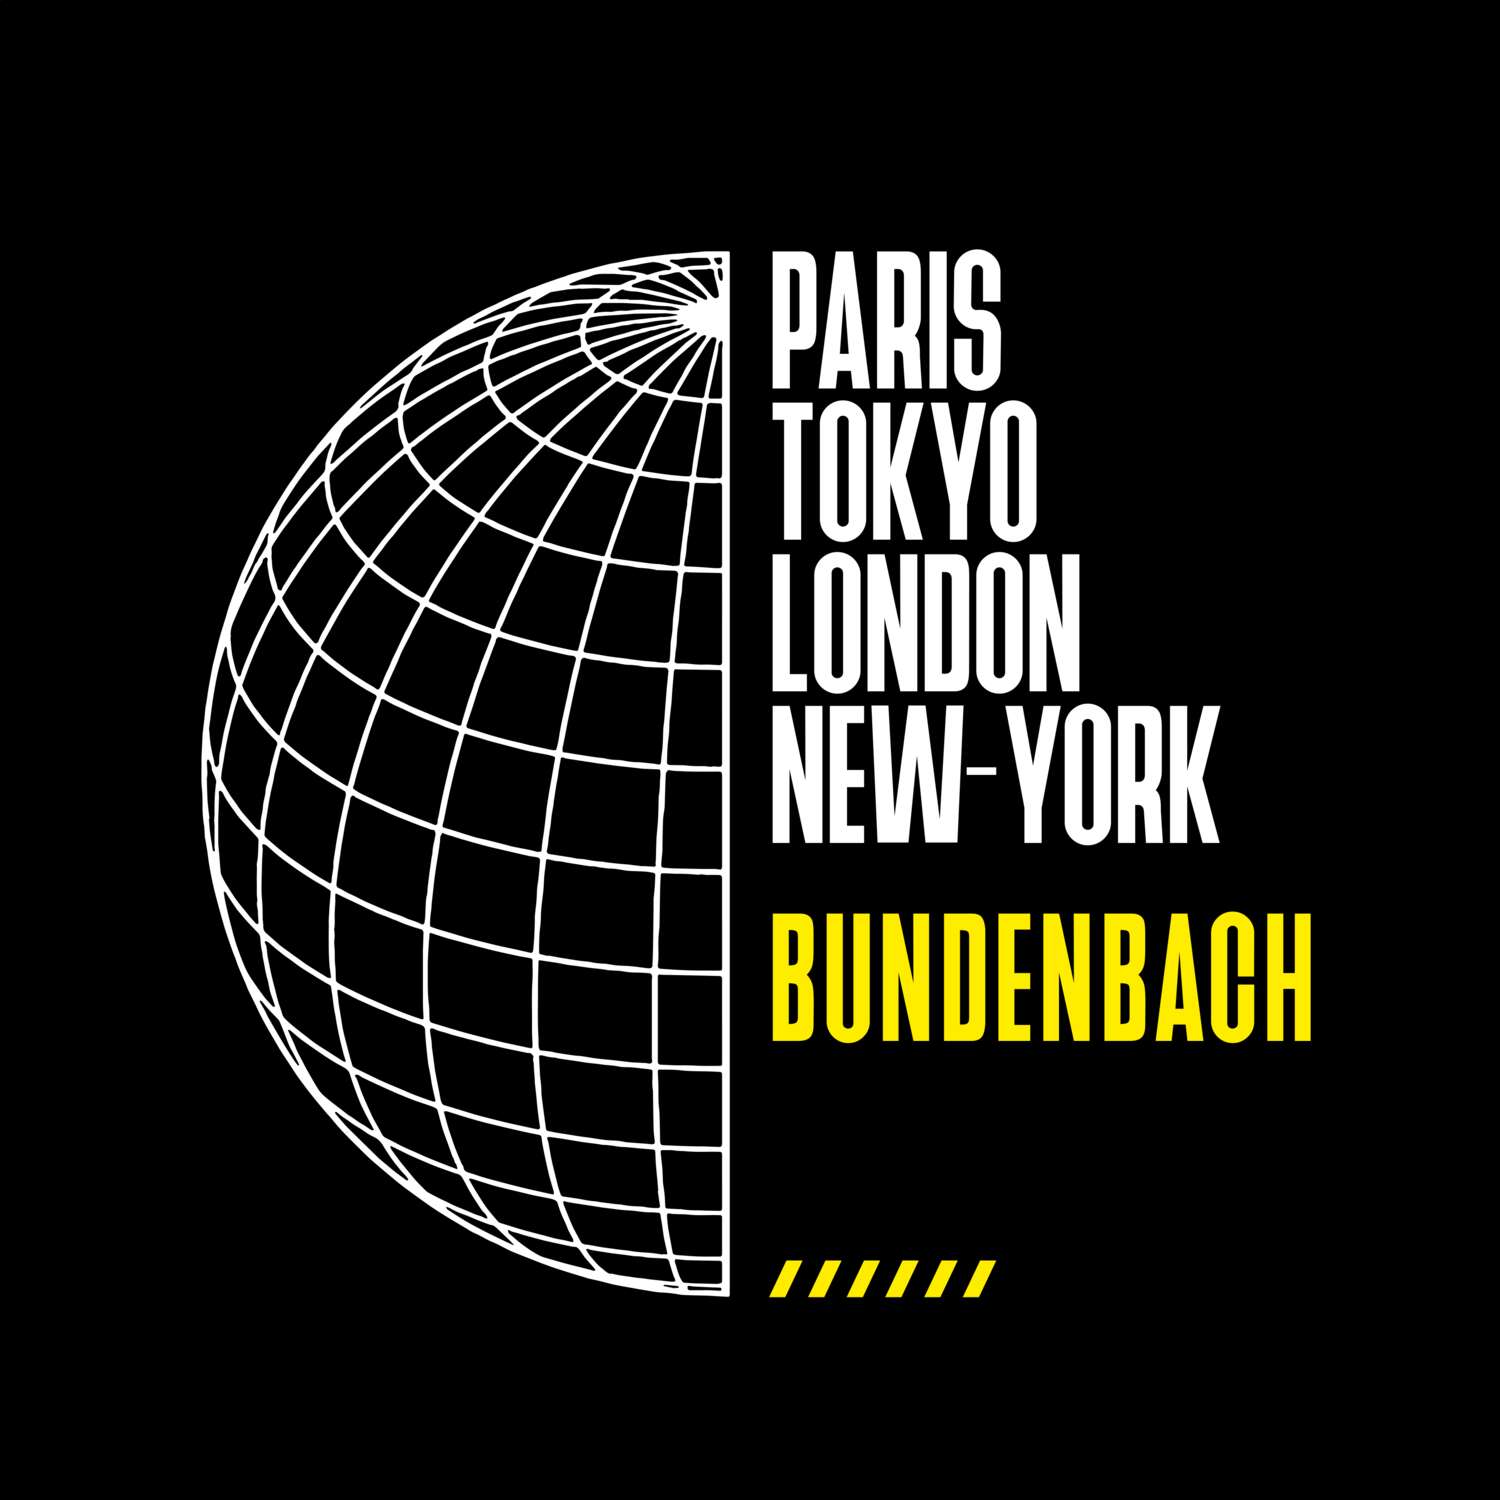 Bundenbach T-Shirt »Paris Tokyo London«